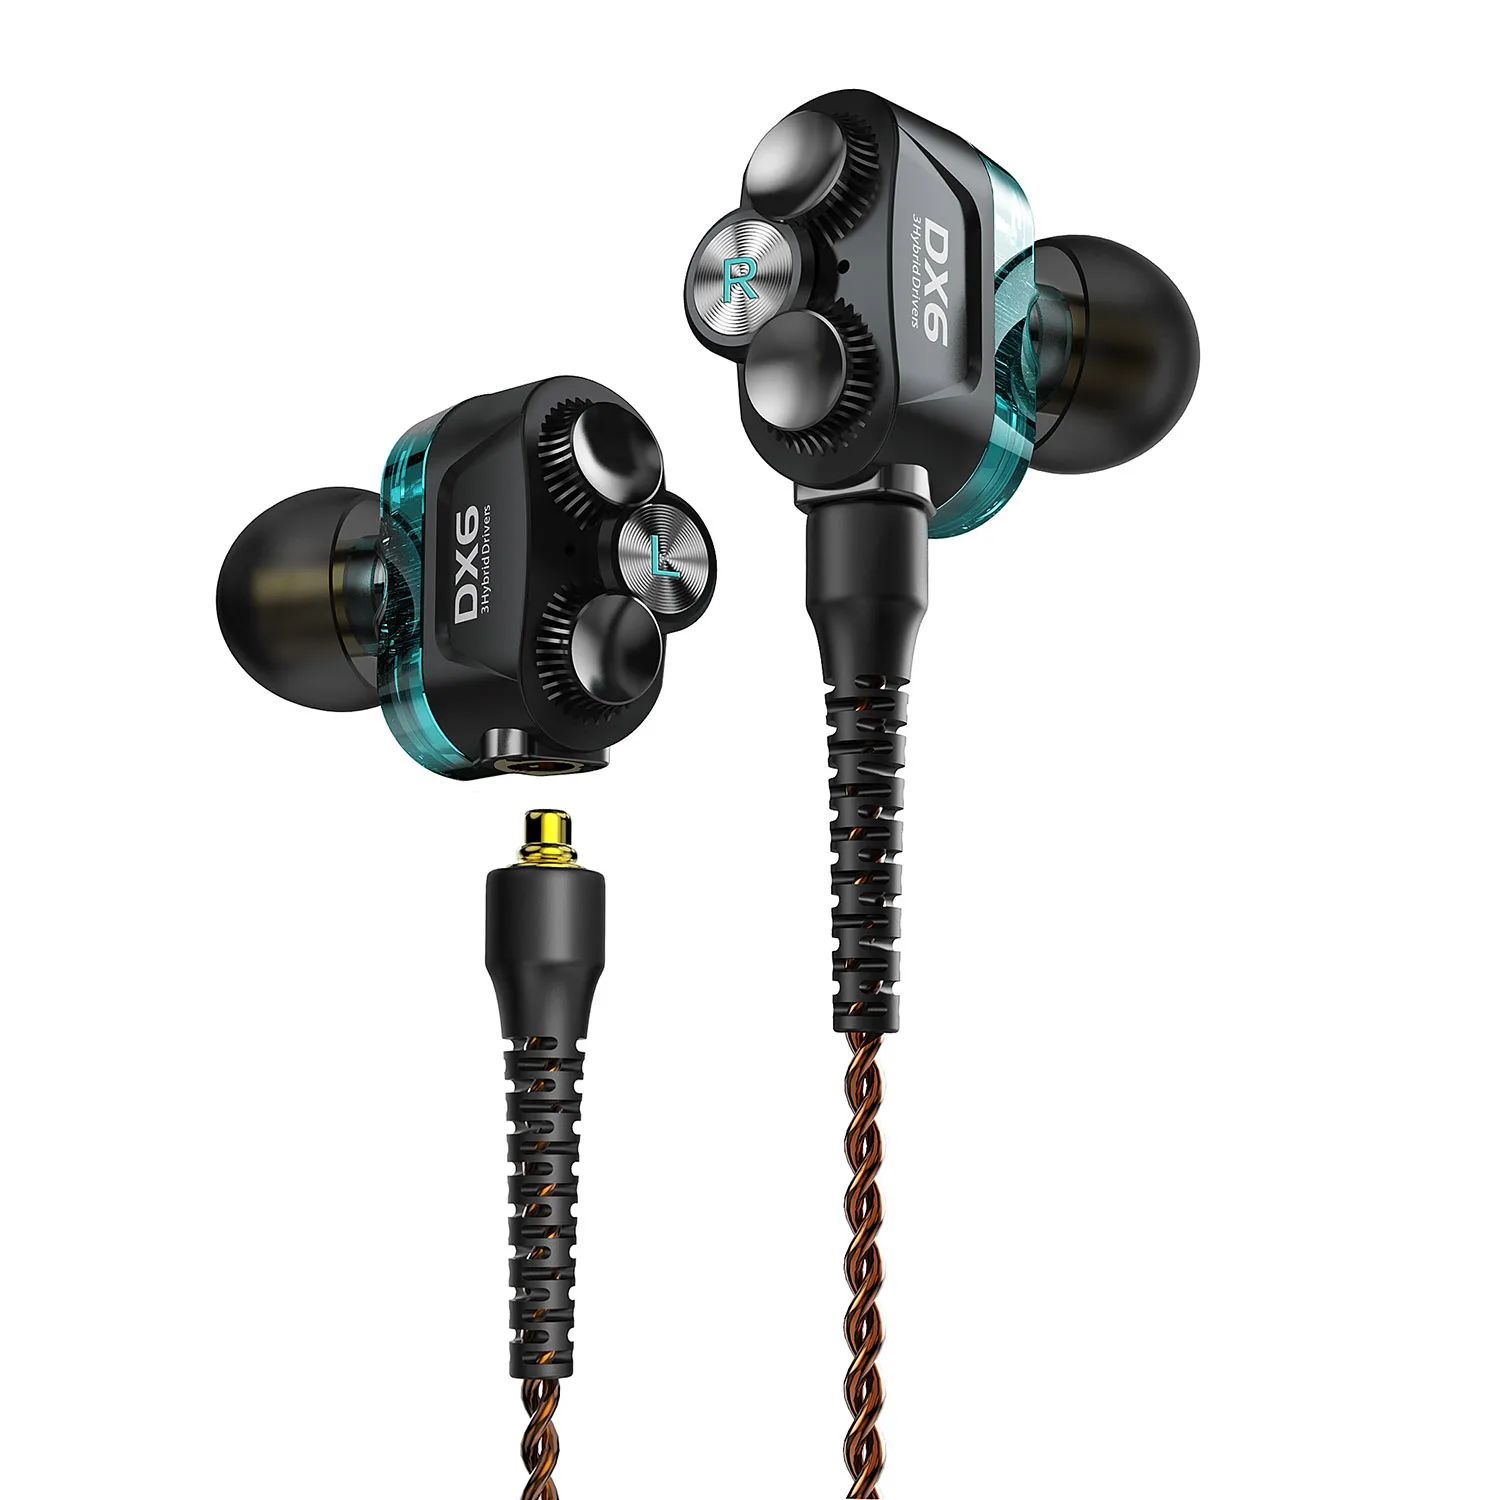 

Plextone DX6 Gaming Earphone Headset In-ear Earbud 3 Hybrid Drivers in-Ear HiFi Earphone for PS4, Xbox one, PC, Phones, Red, black, green